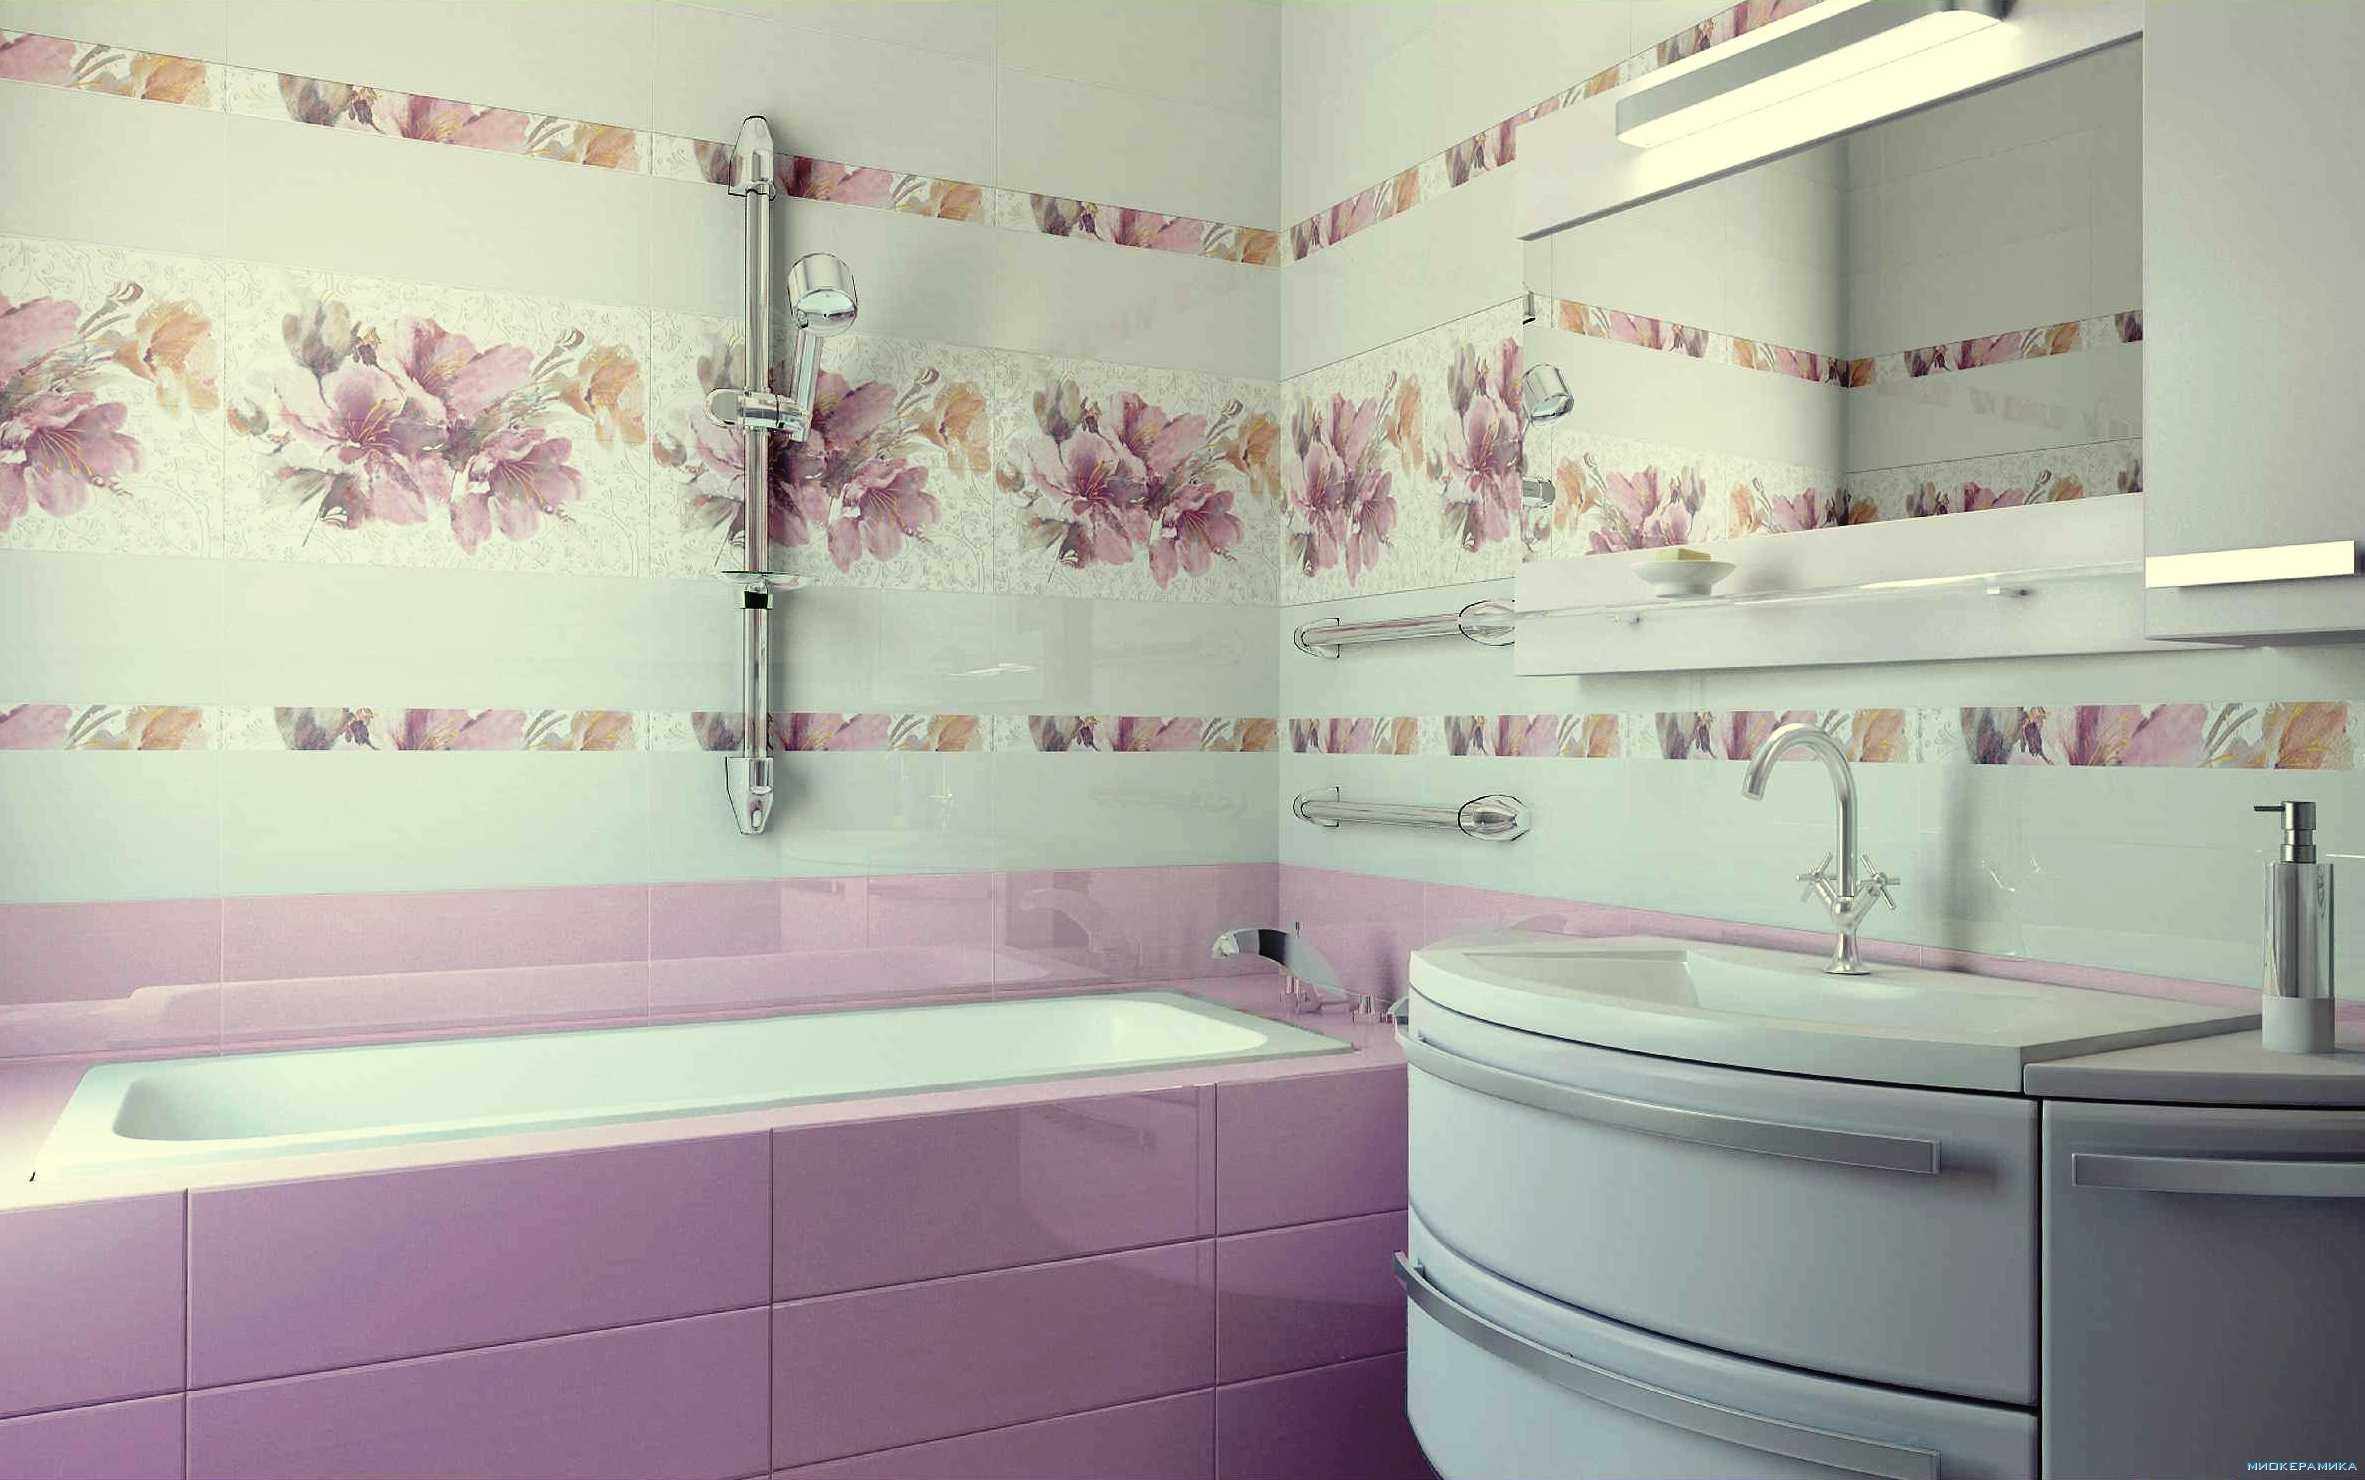 An example of a bright tiled bathroom decor